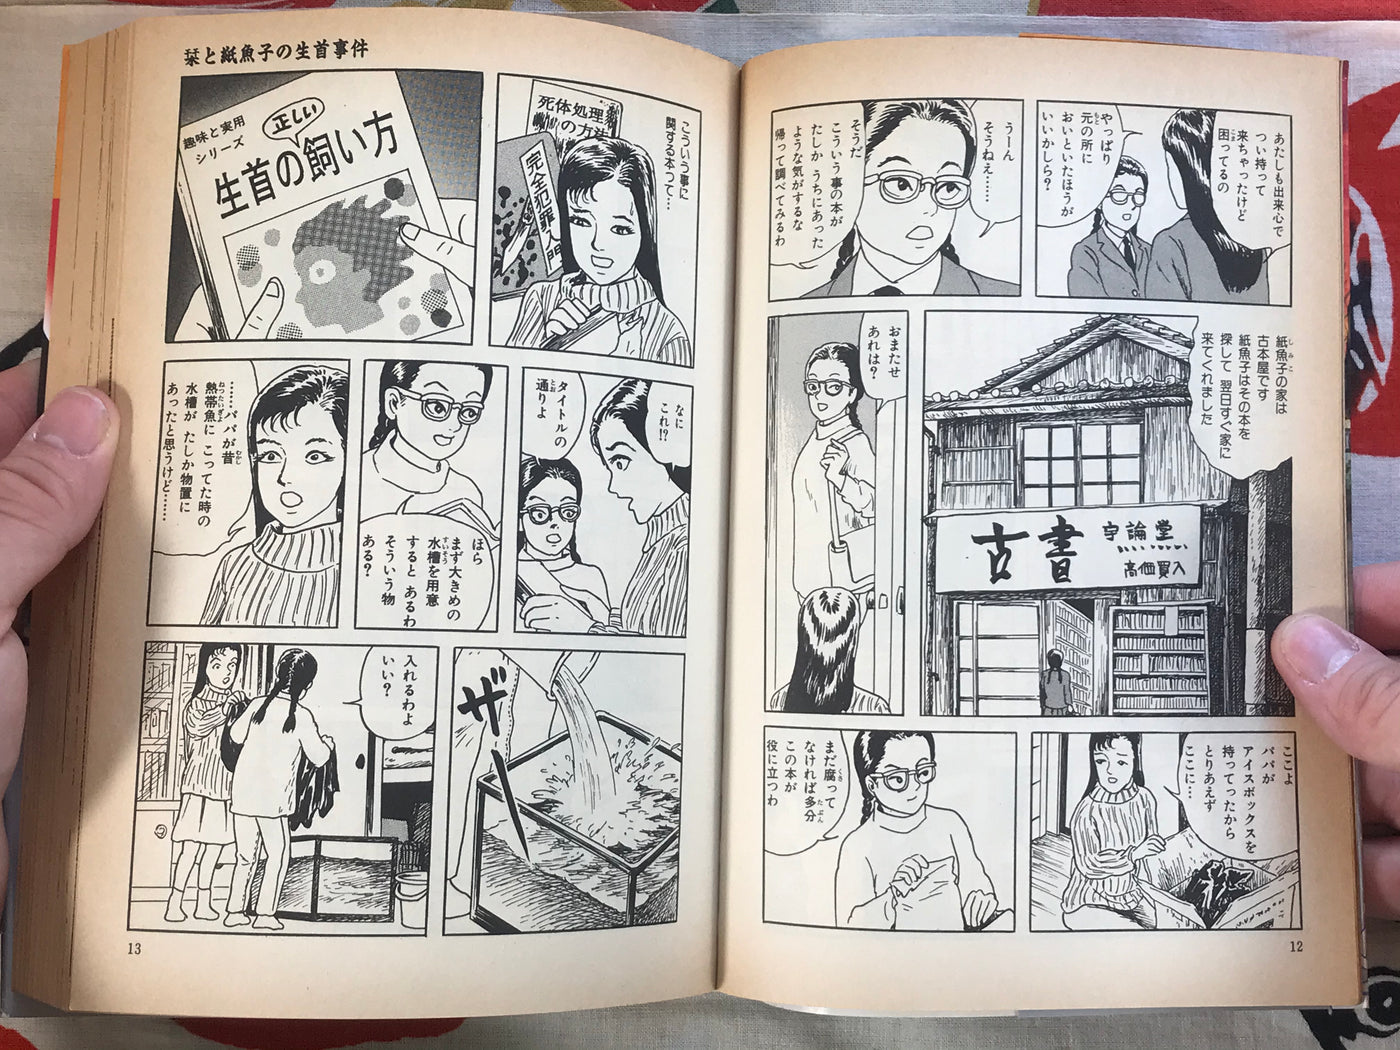 The Beheading Incident of Shiori and Kamiko by Daijiro Morohoshi (1997)